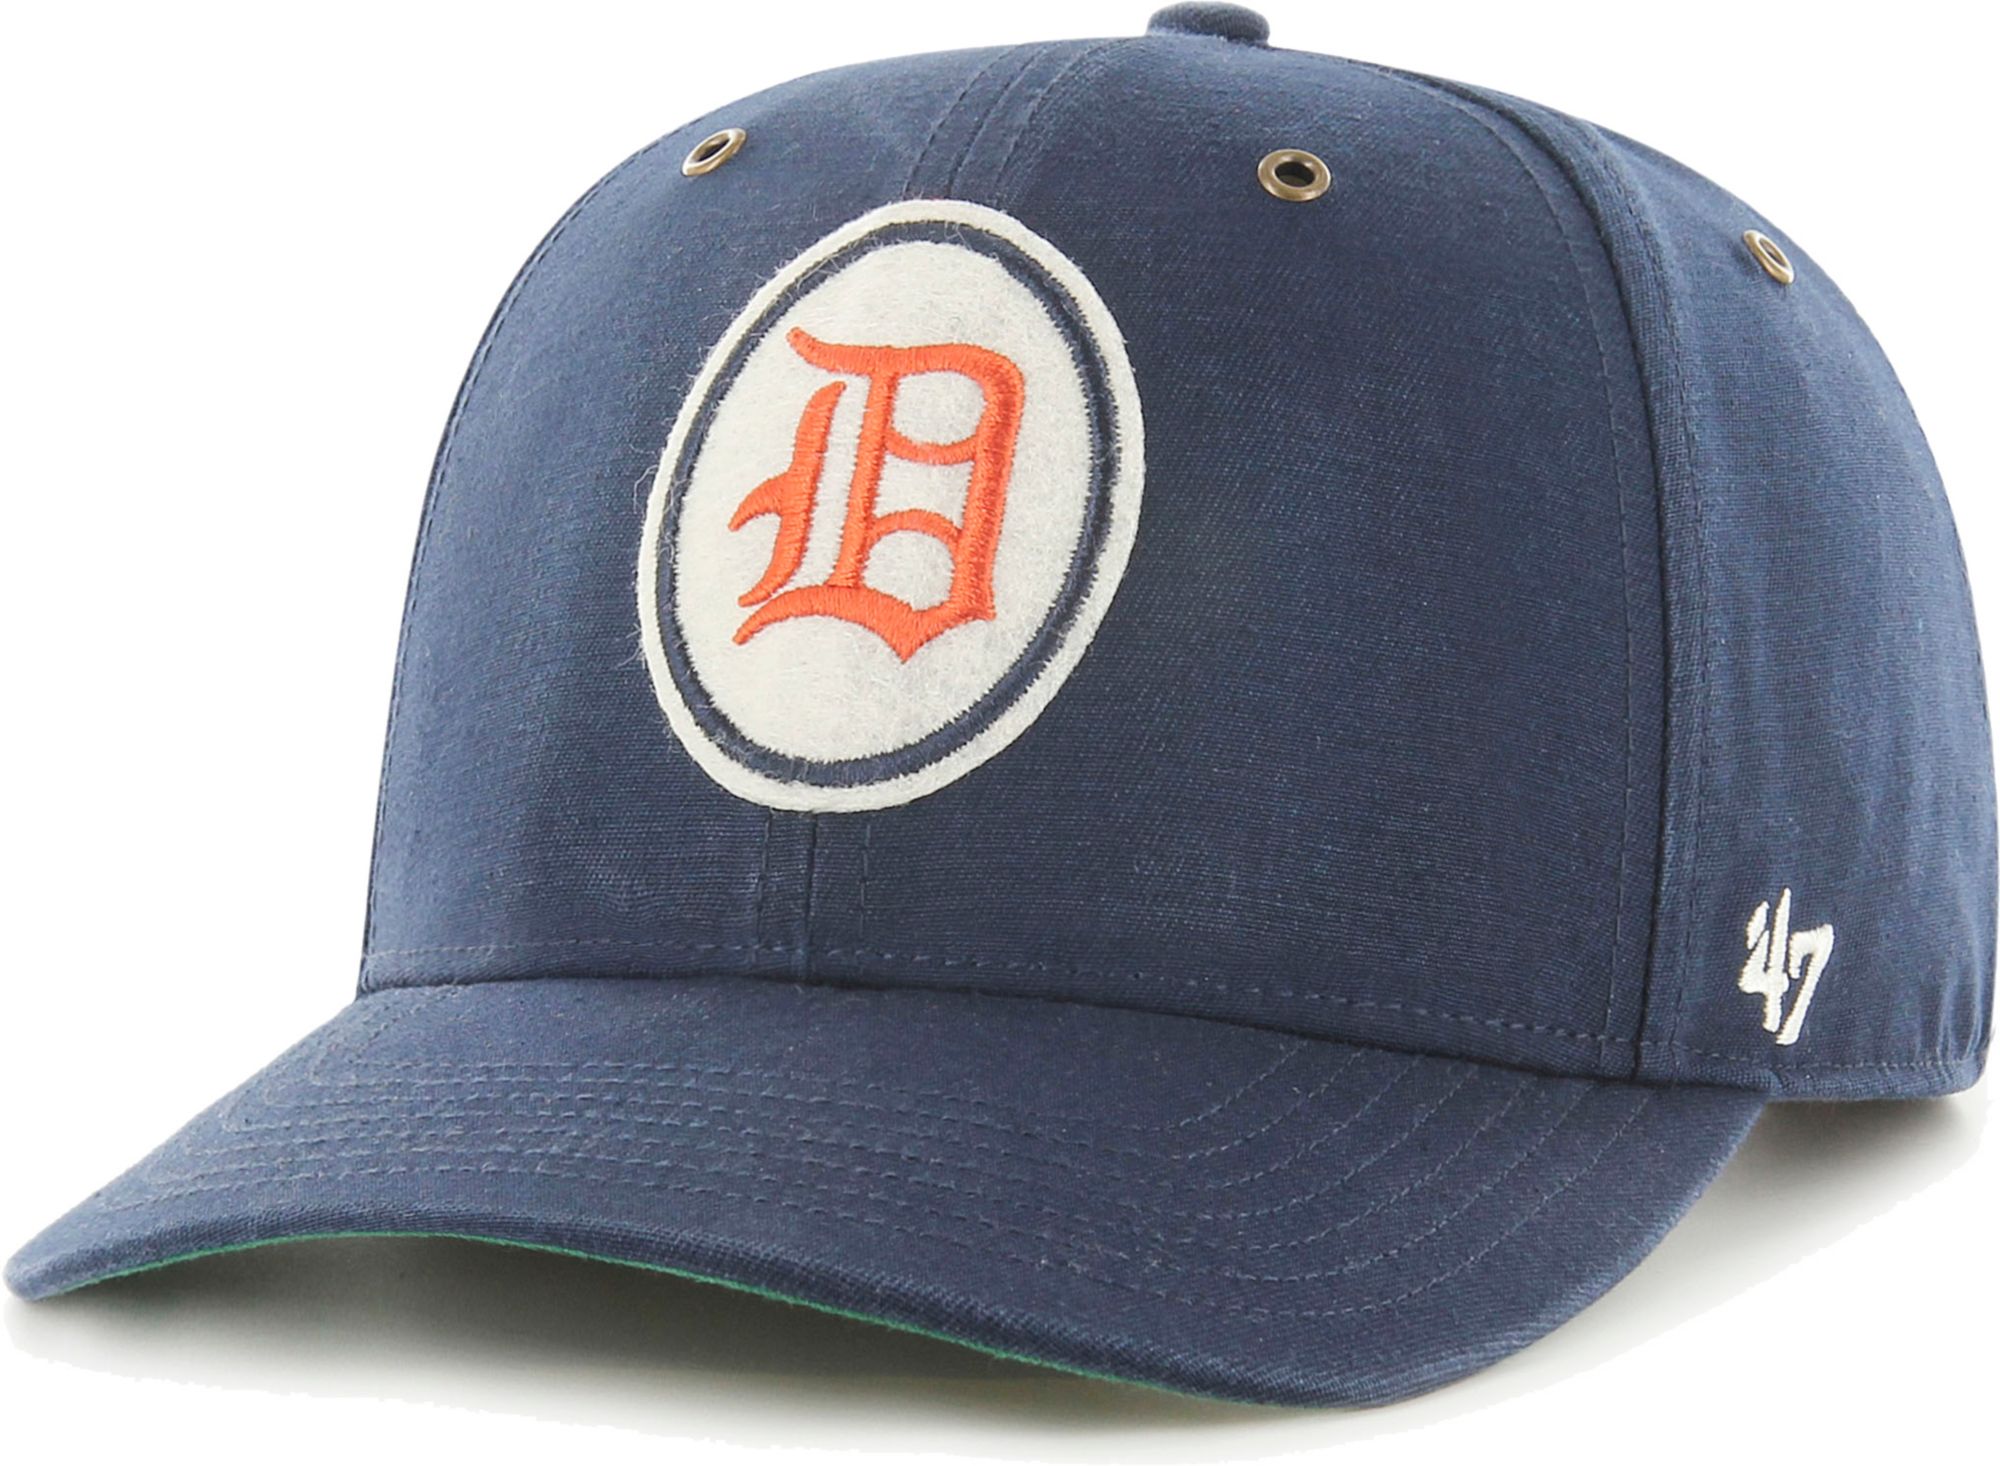 Detroit Tigers '47 x Hurley Paradise MVP Snapback Hat - Navy